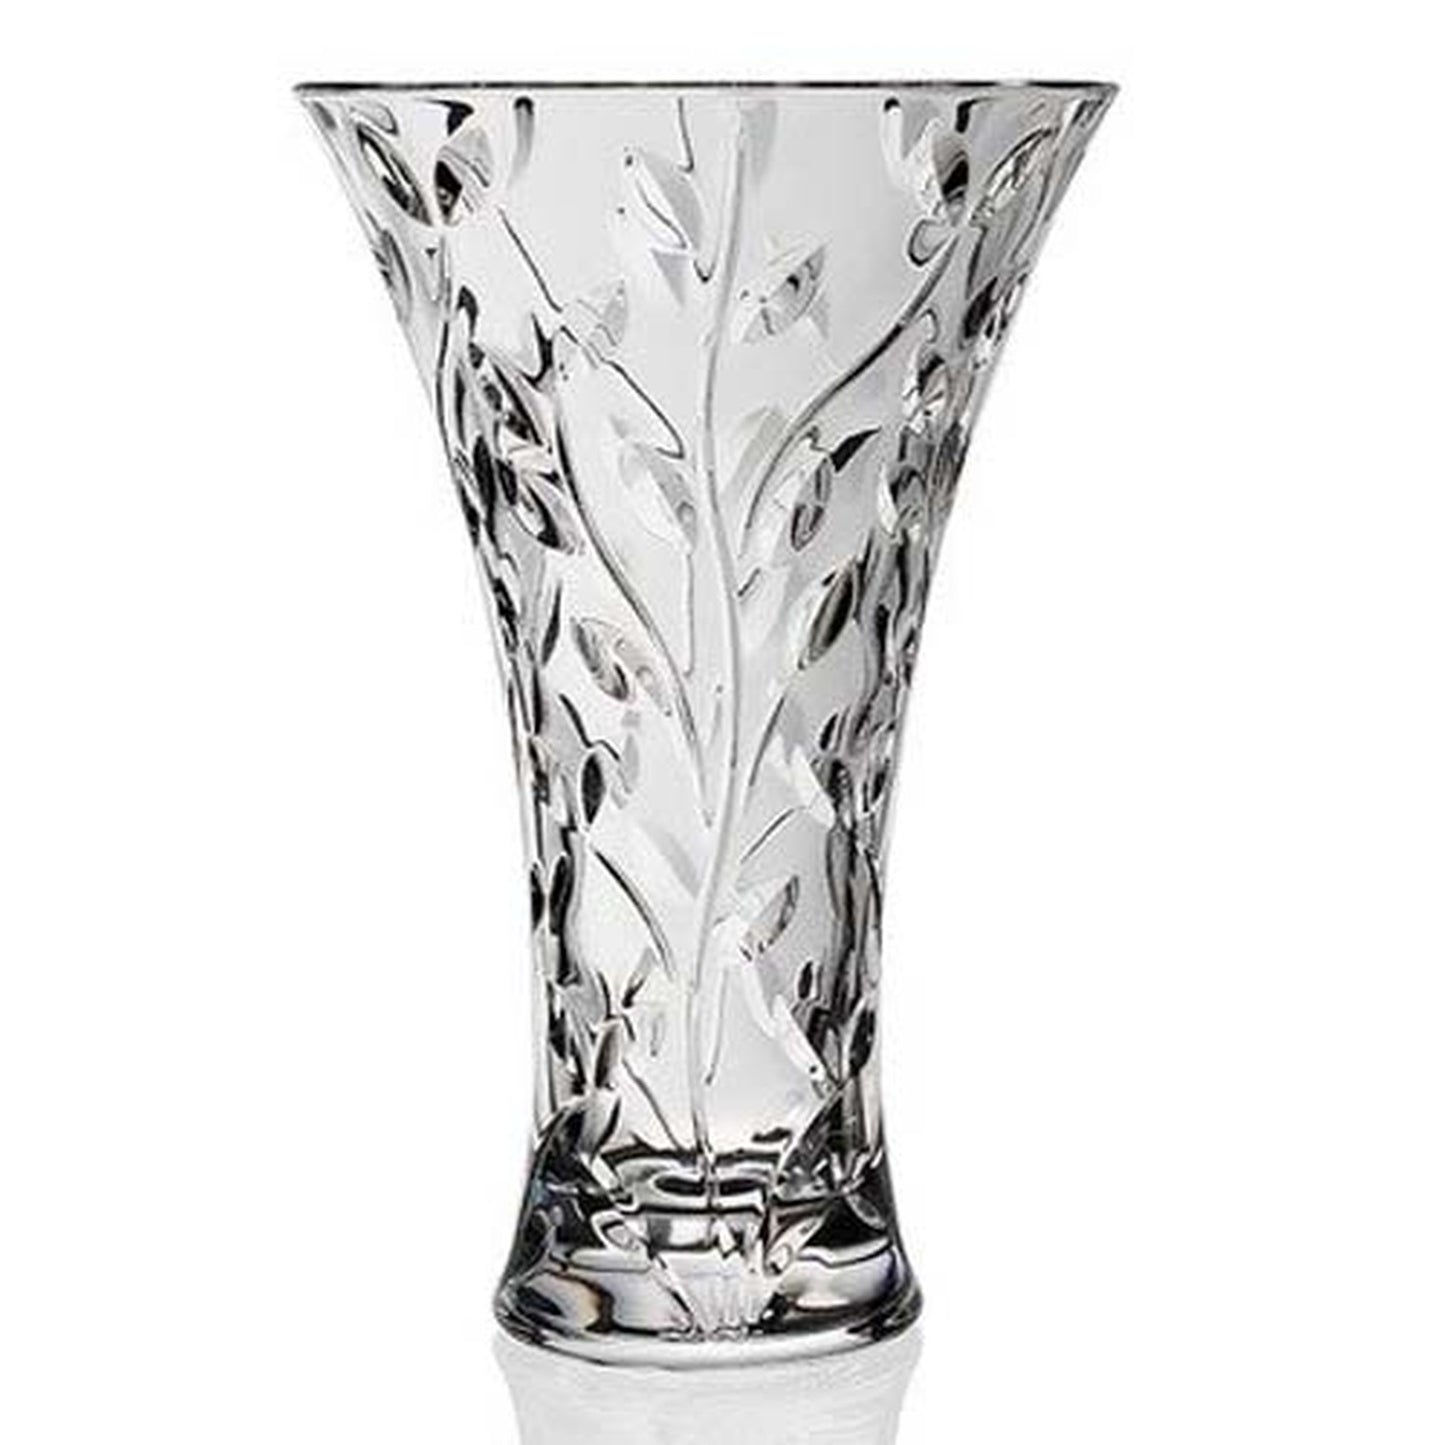 Rcr Laurus Crystal Vase, 11 inches, Crystal